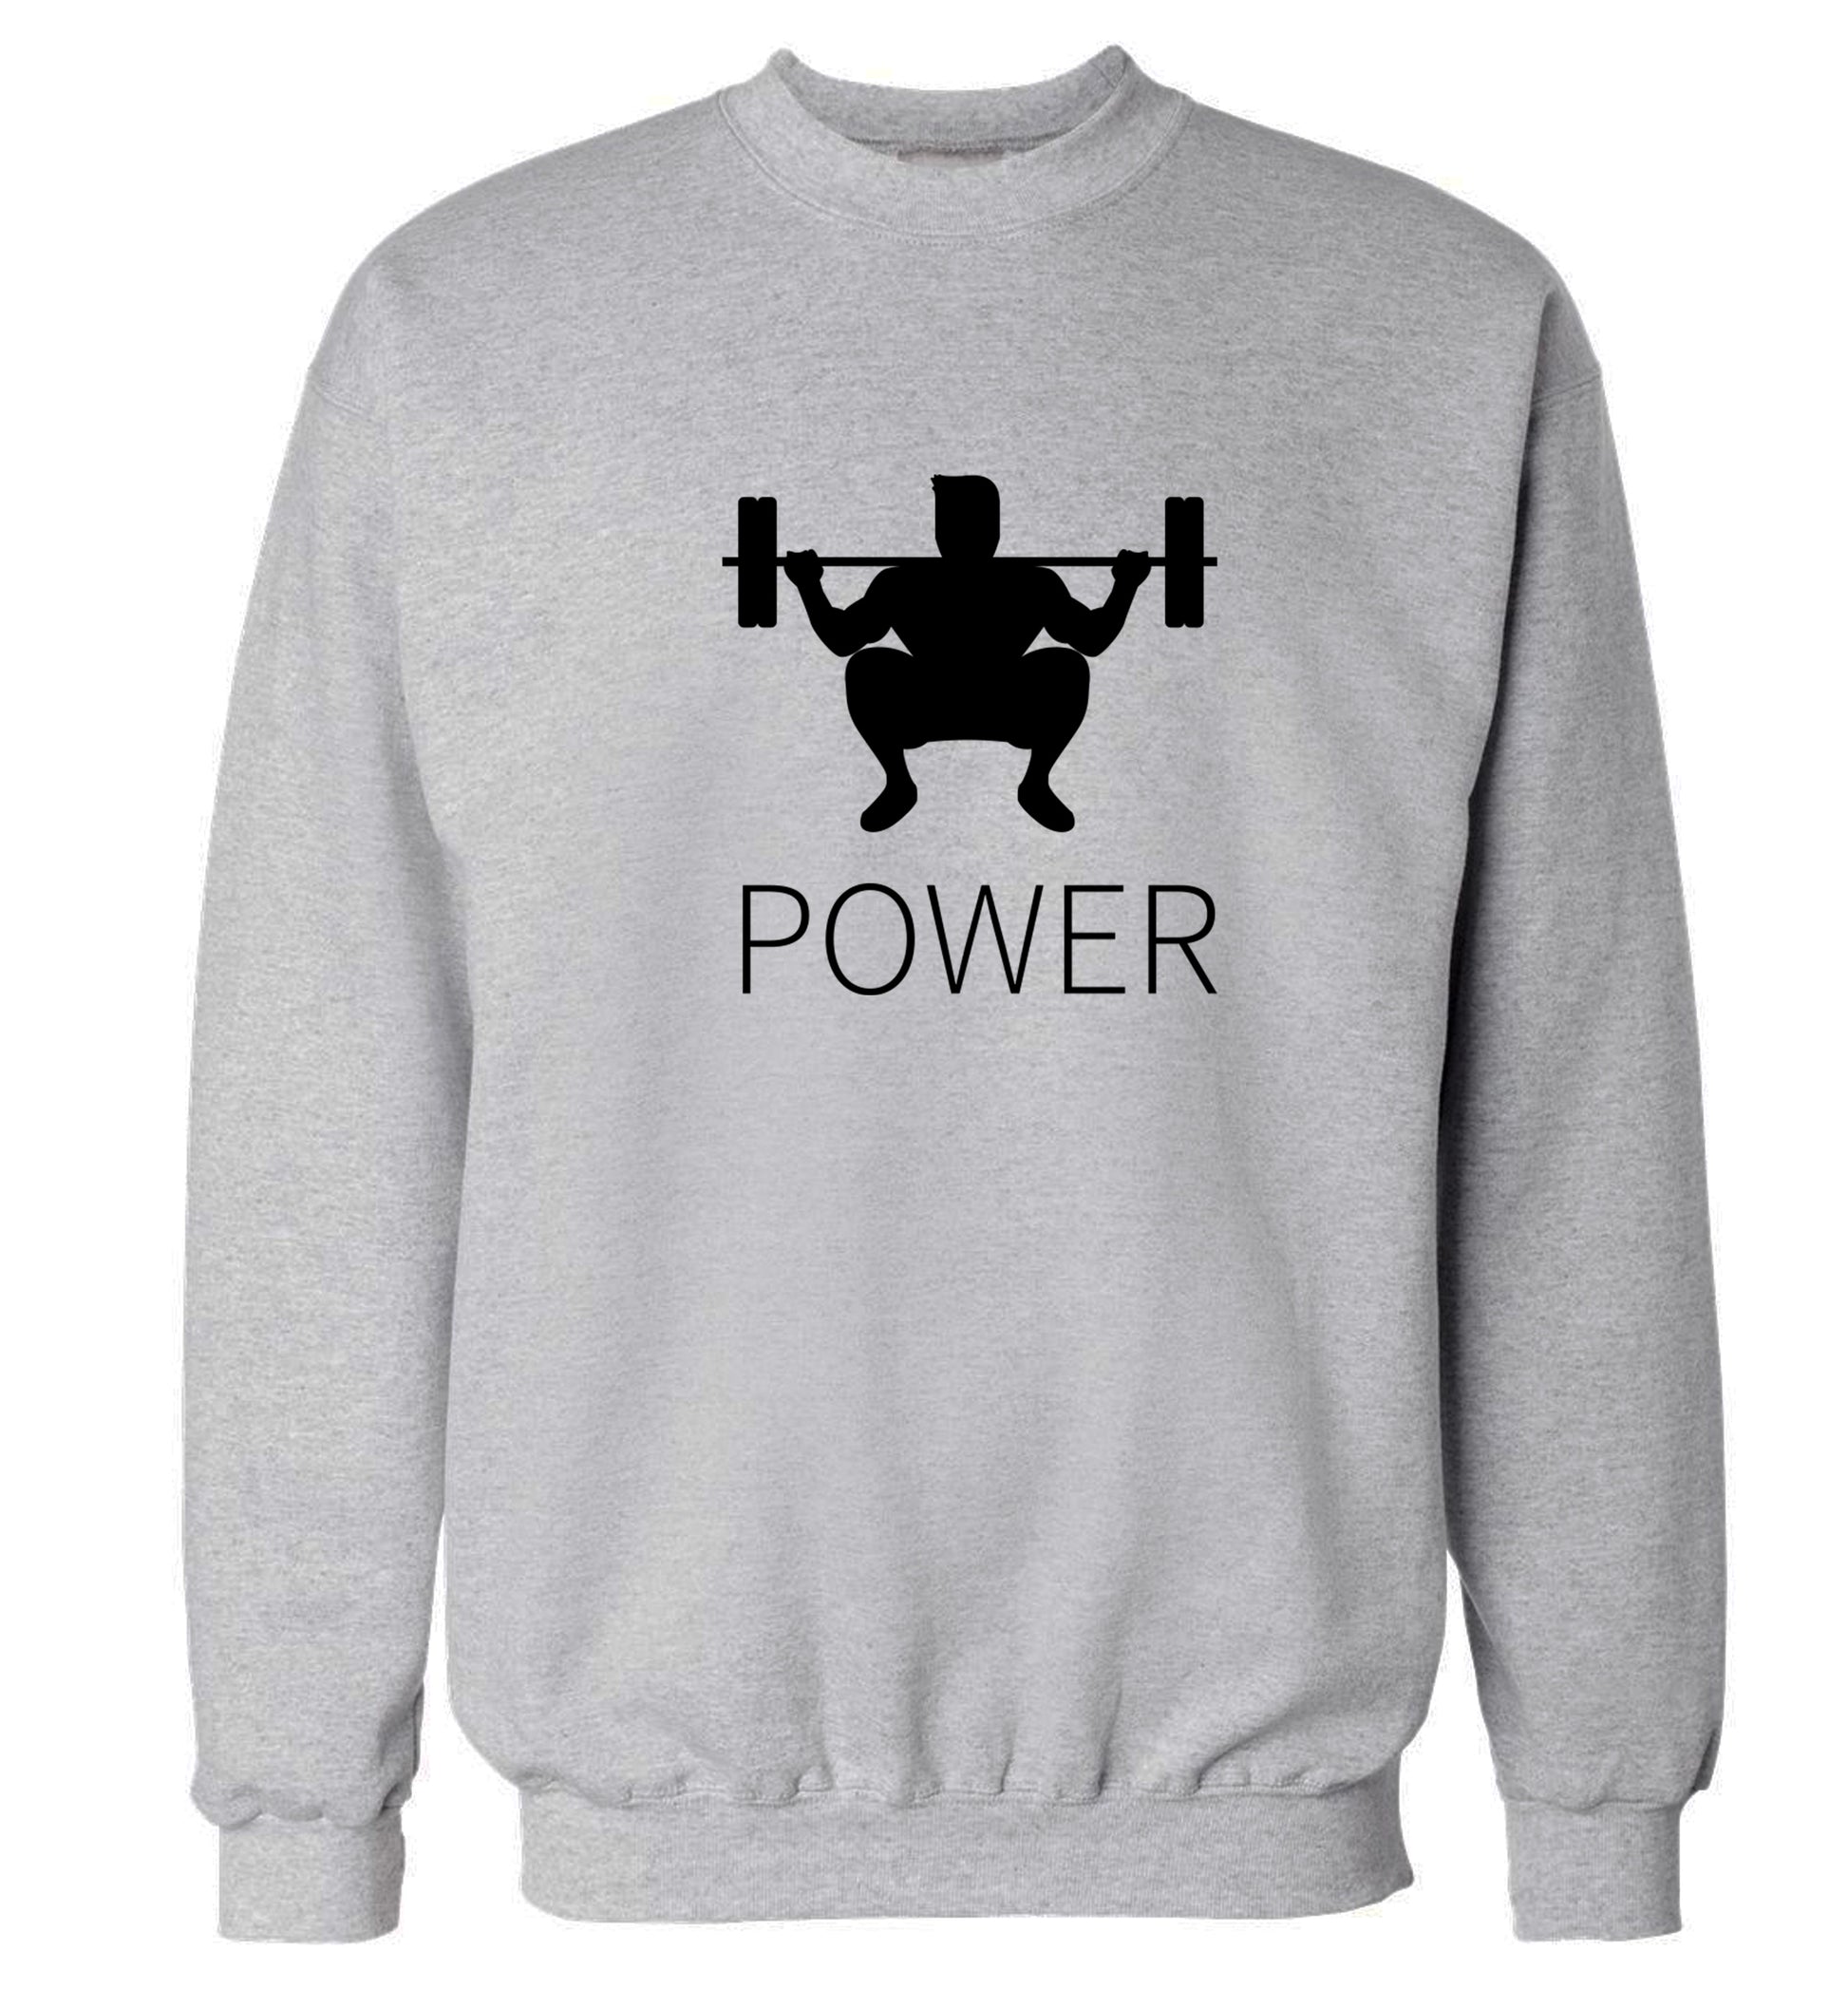 Lift power Adult's unisex grey Sweater 2XL